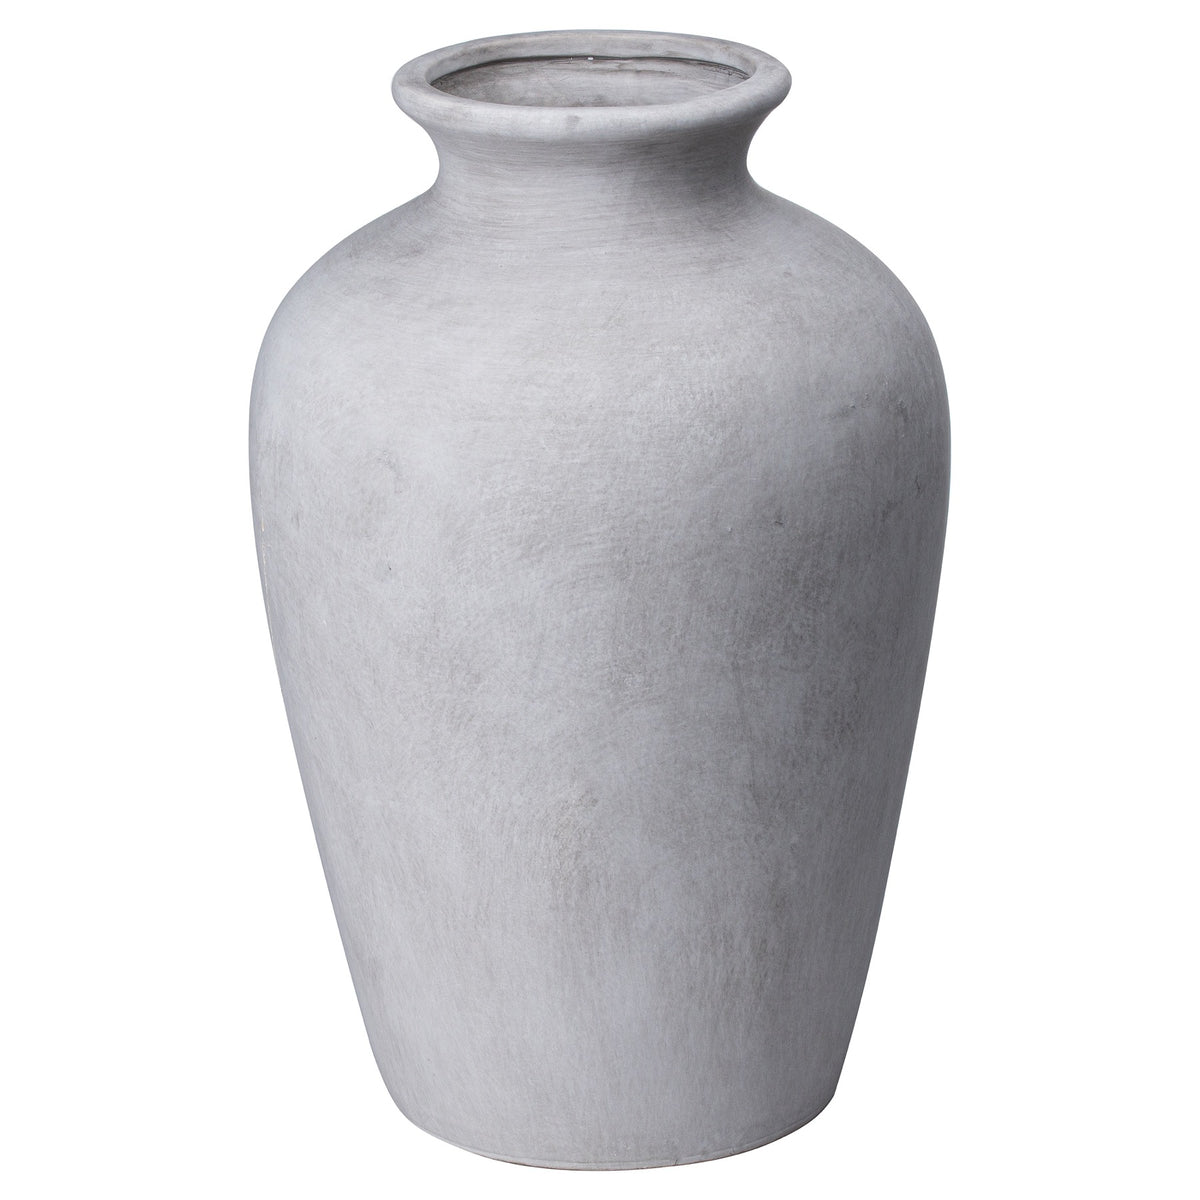 chours stone vase white vase large statement ceramic white for sale uk online